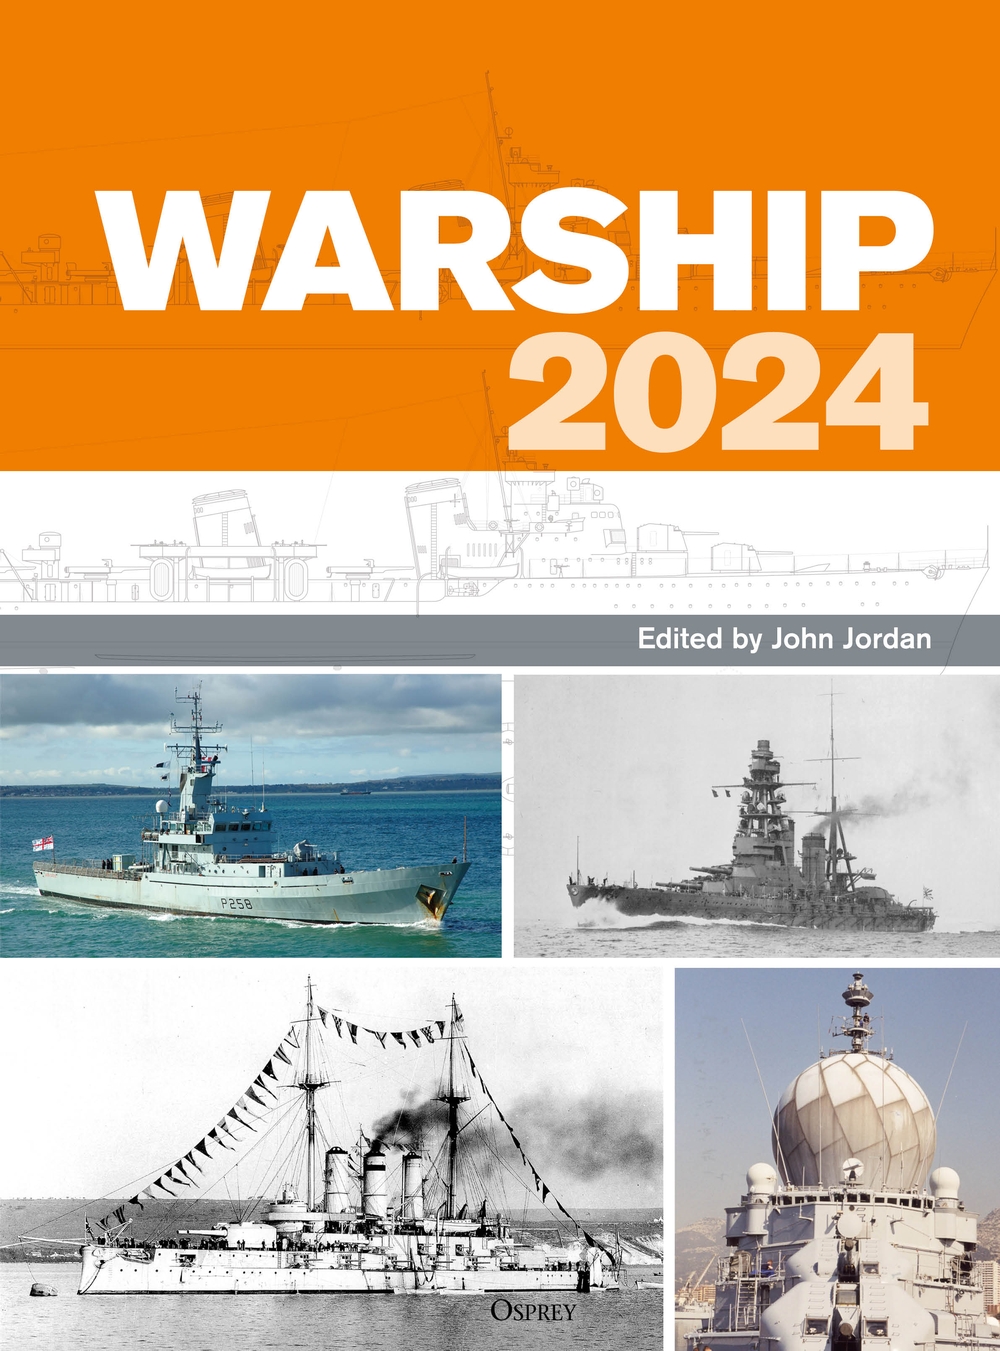 Warship 2024 book jacket